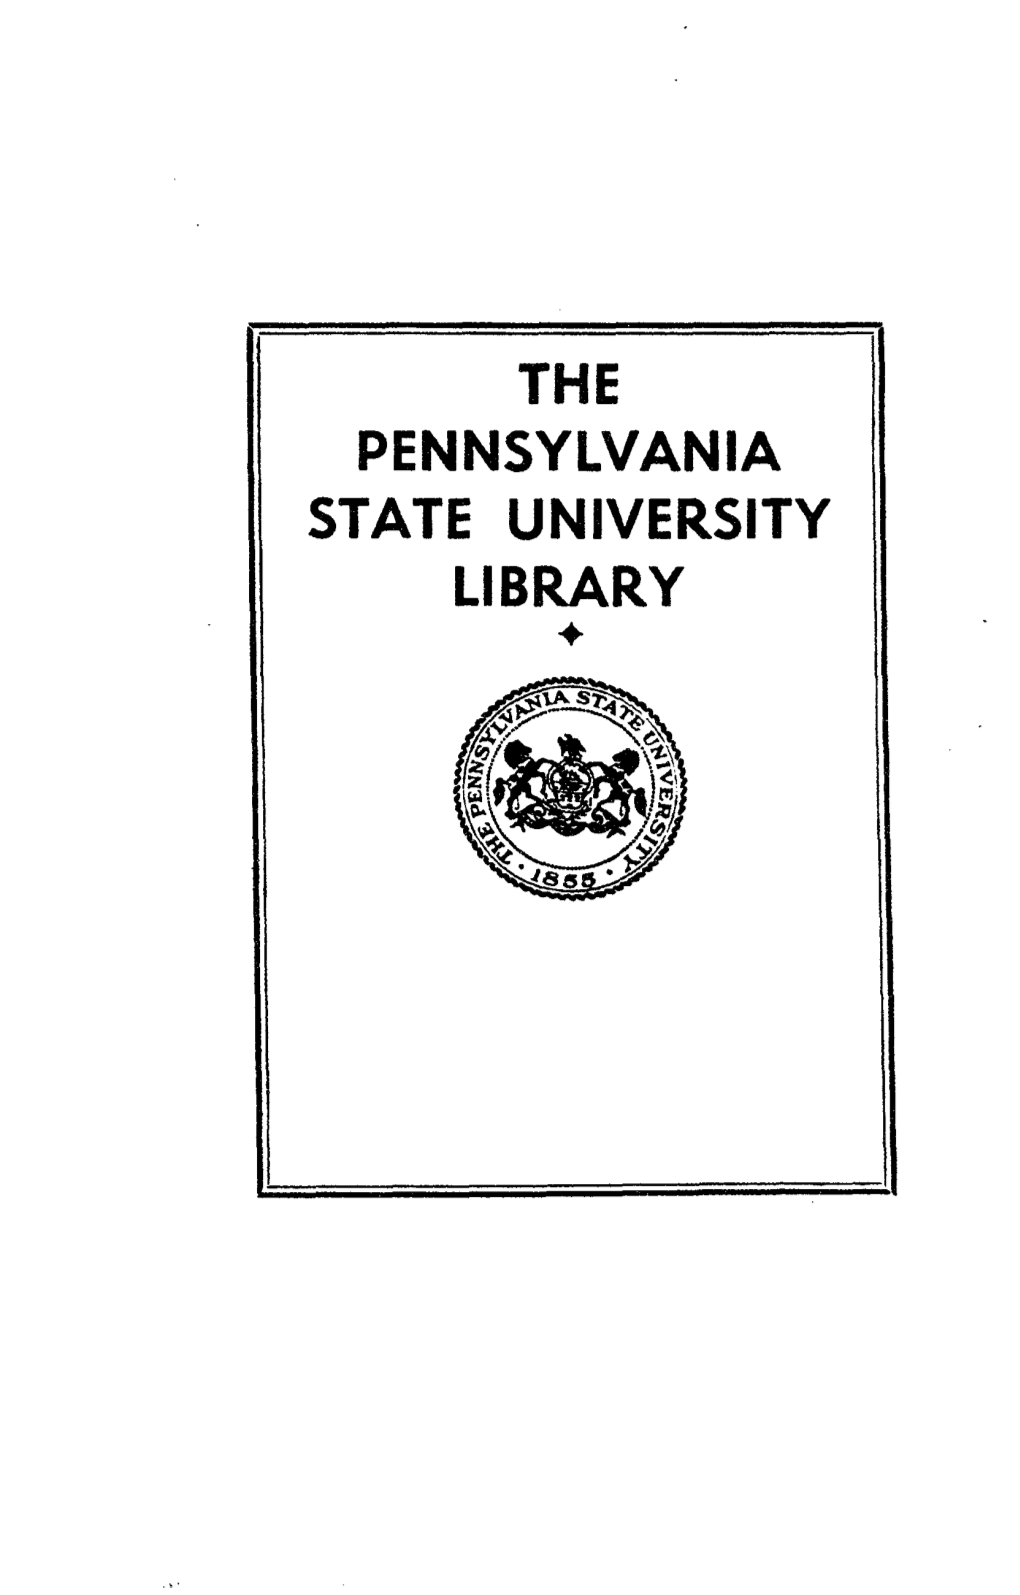 The Pennsylvania State University Library